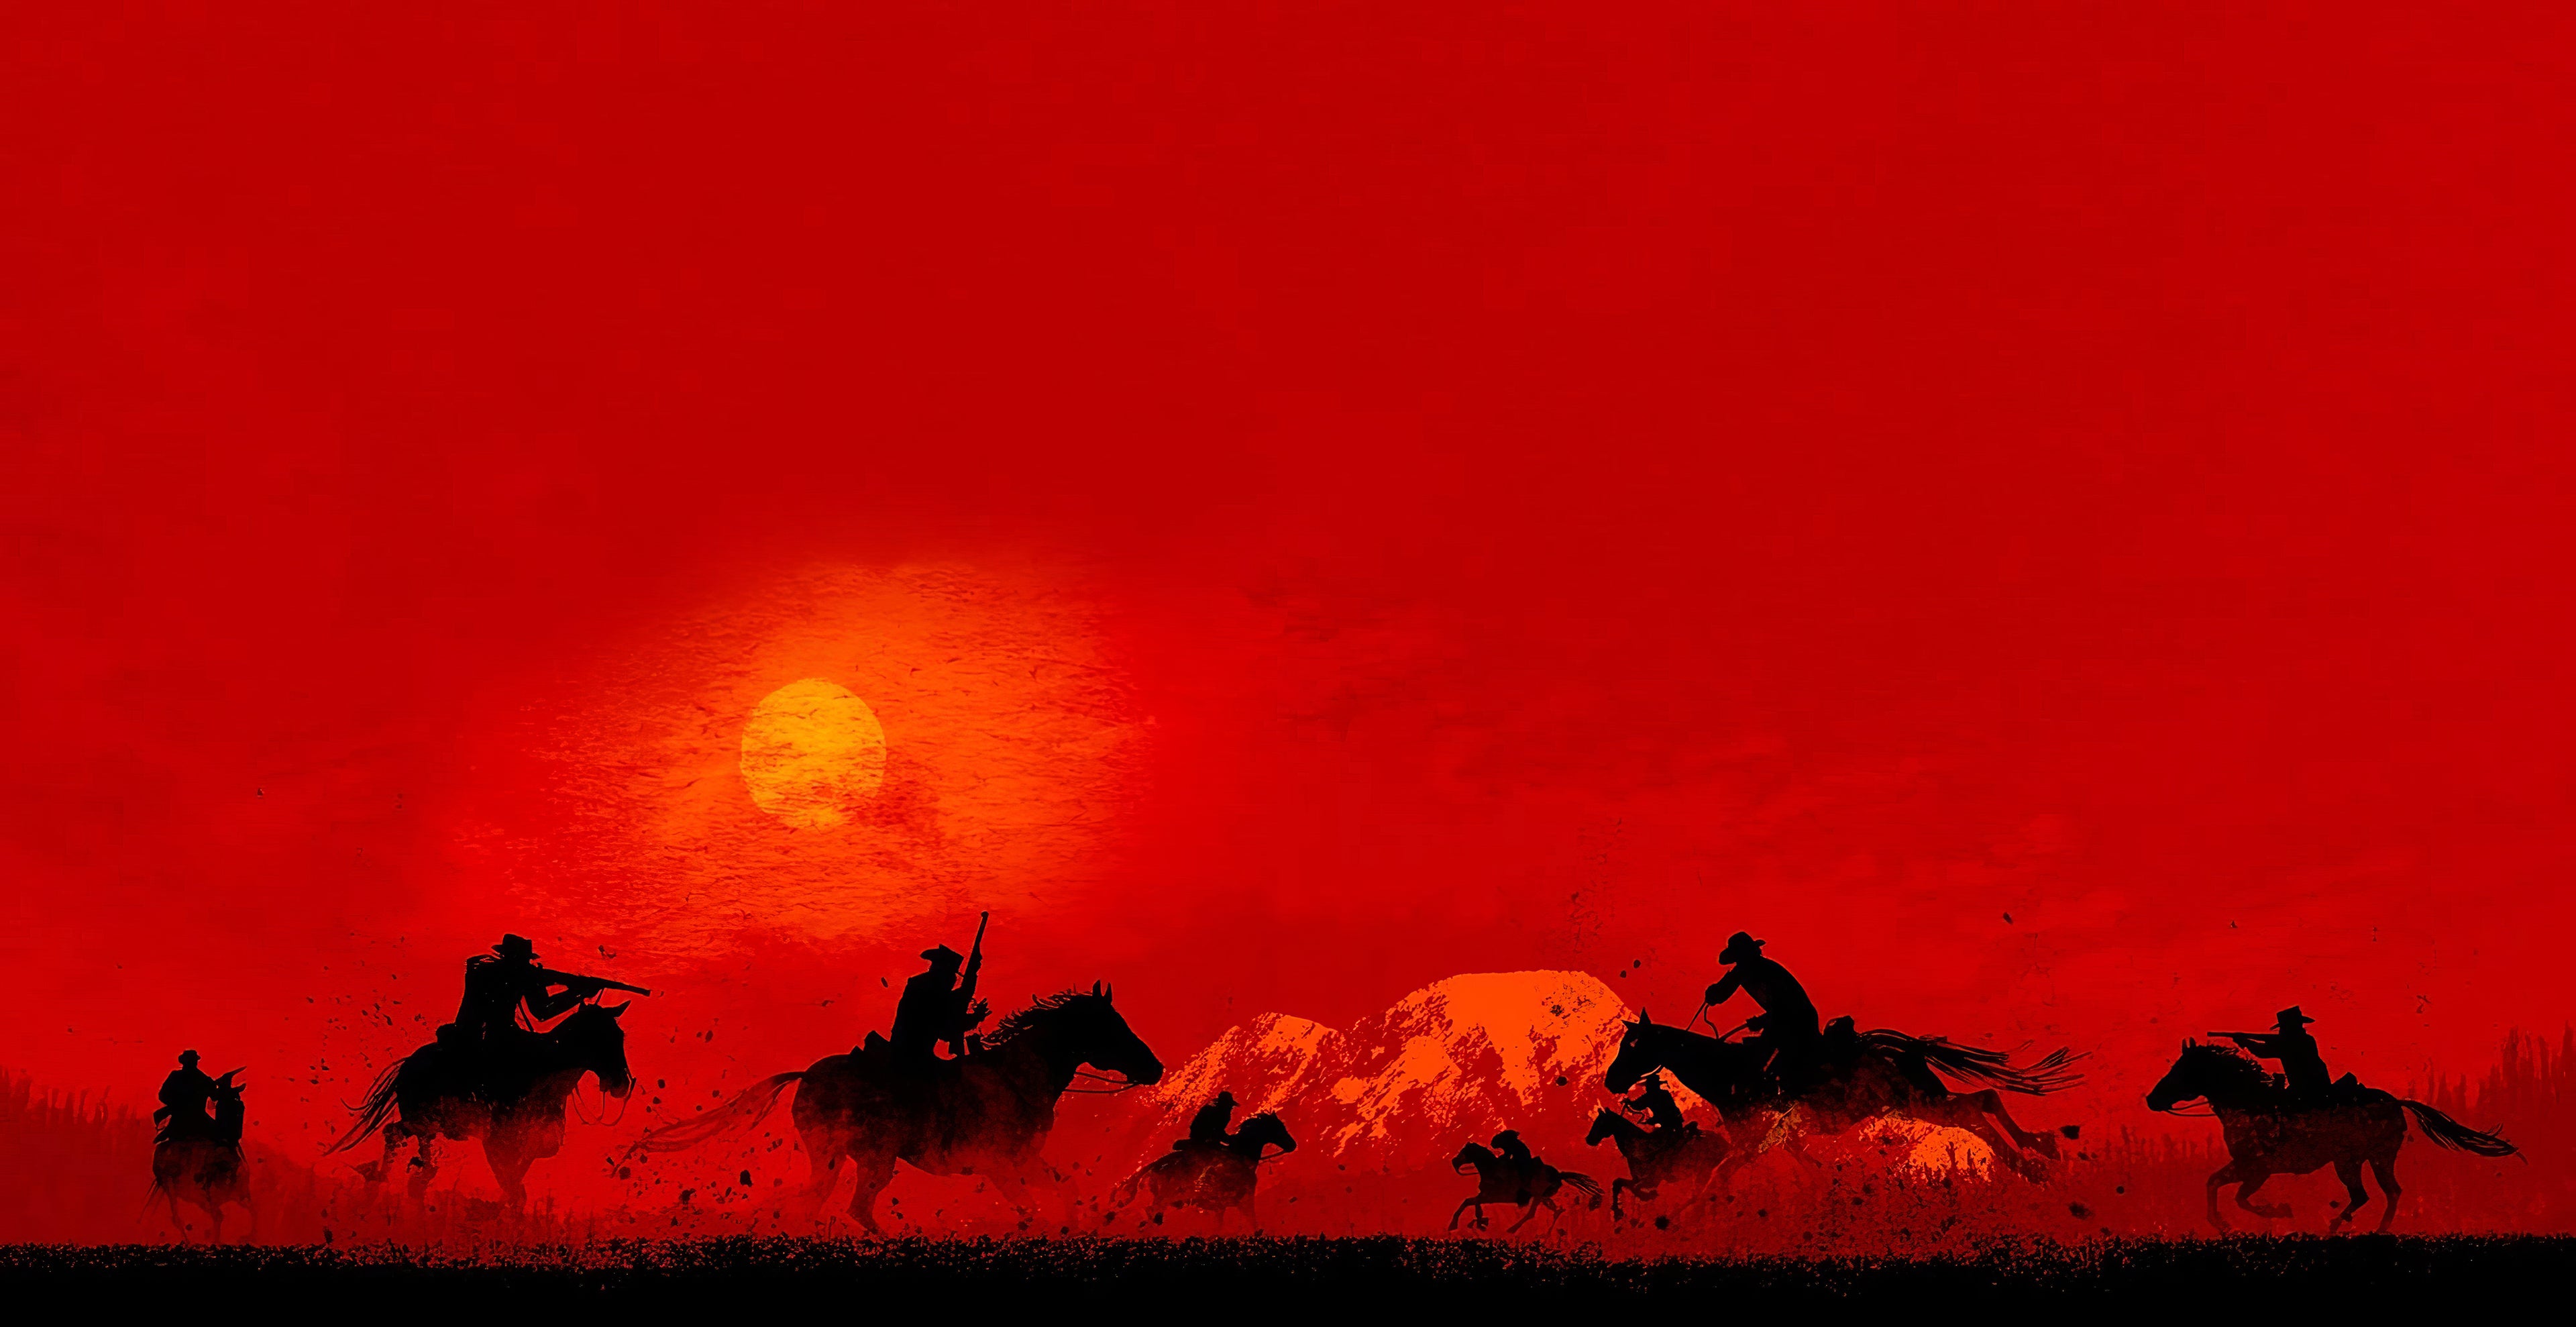 Red Dead Redemption 2 Wallpaper - Red Dead Redemption 2 21 9 - HD Wallpaper 